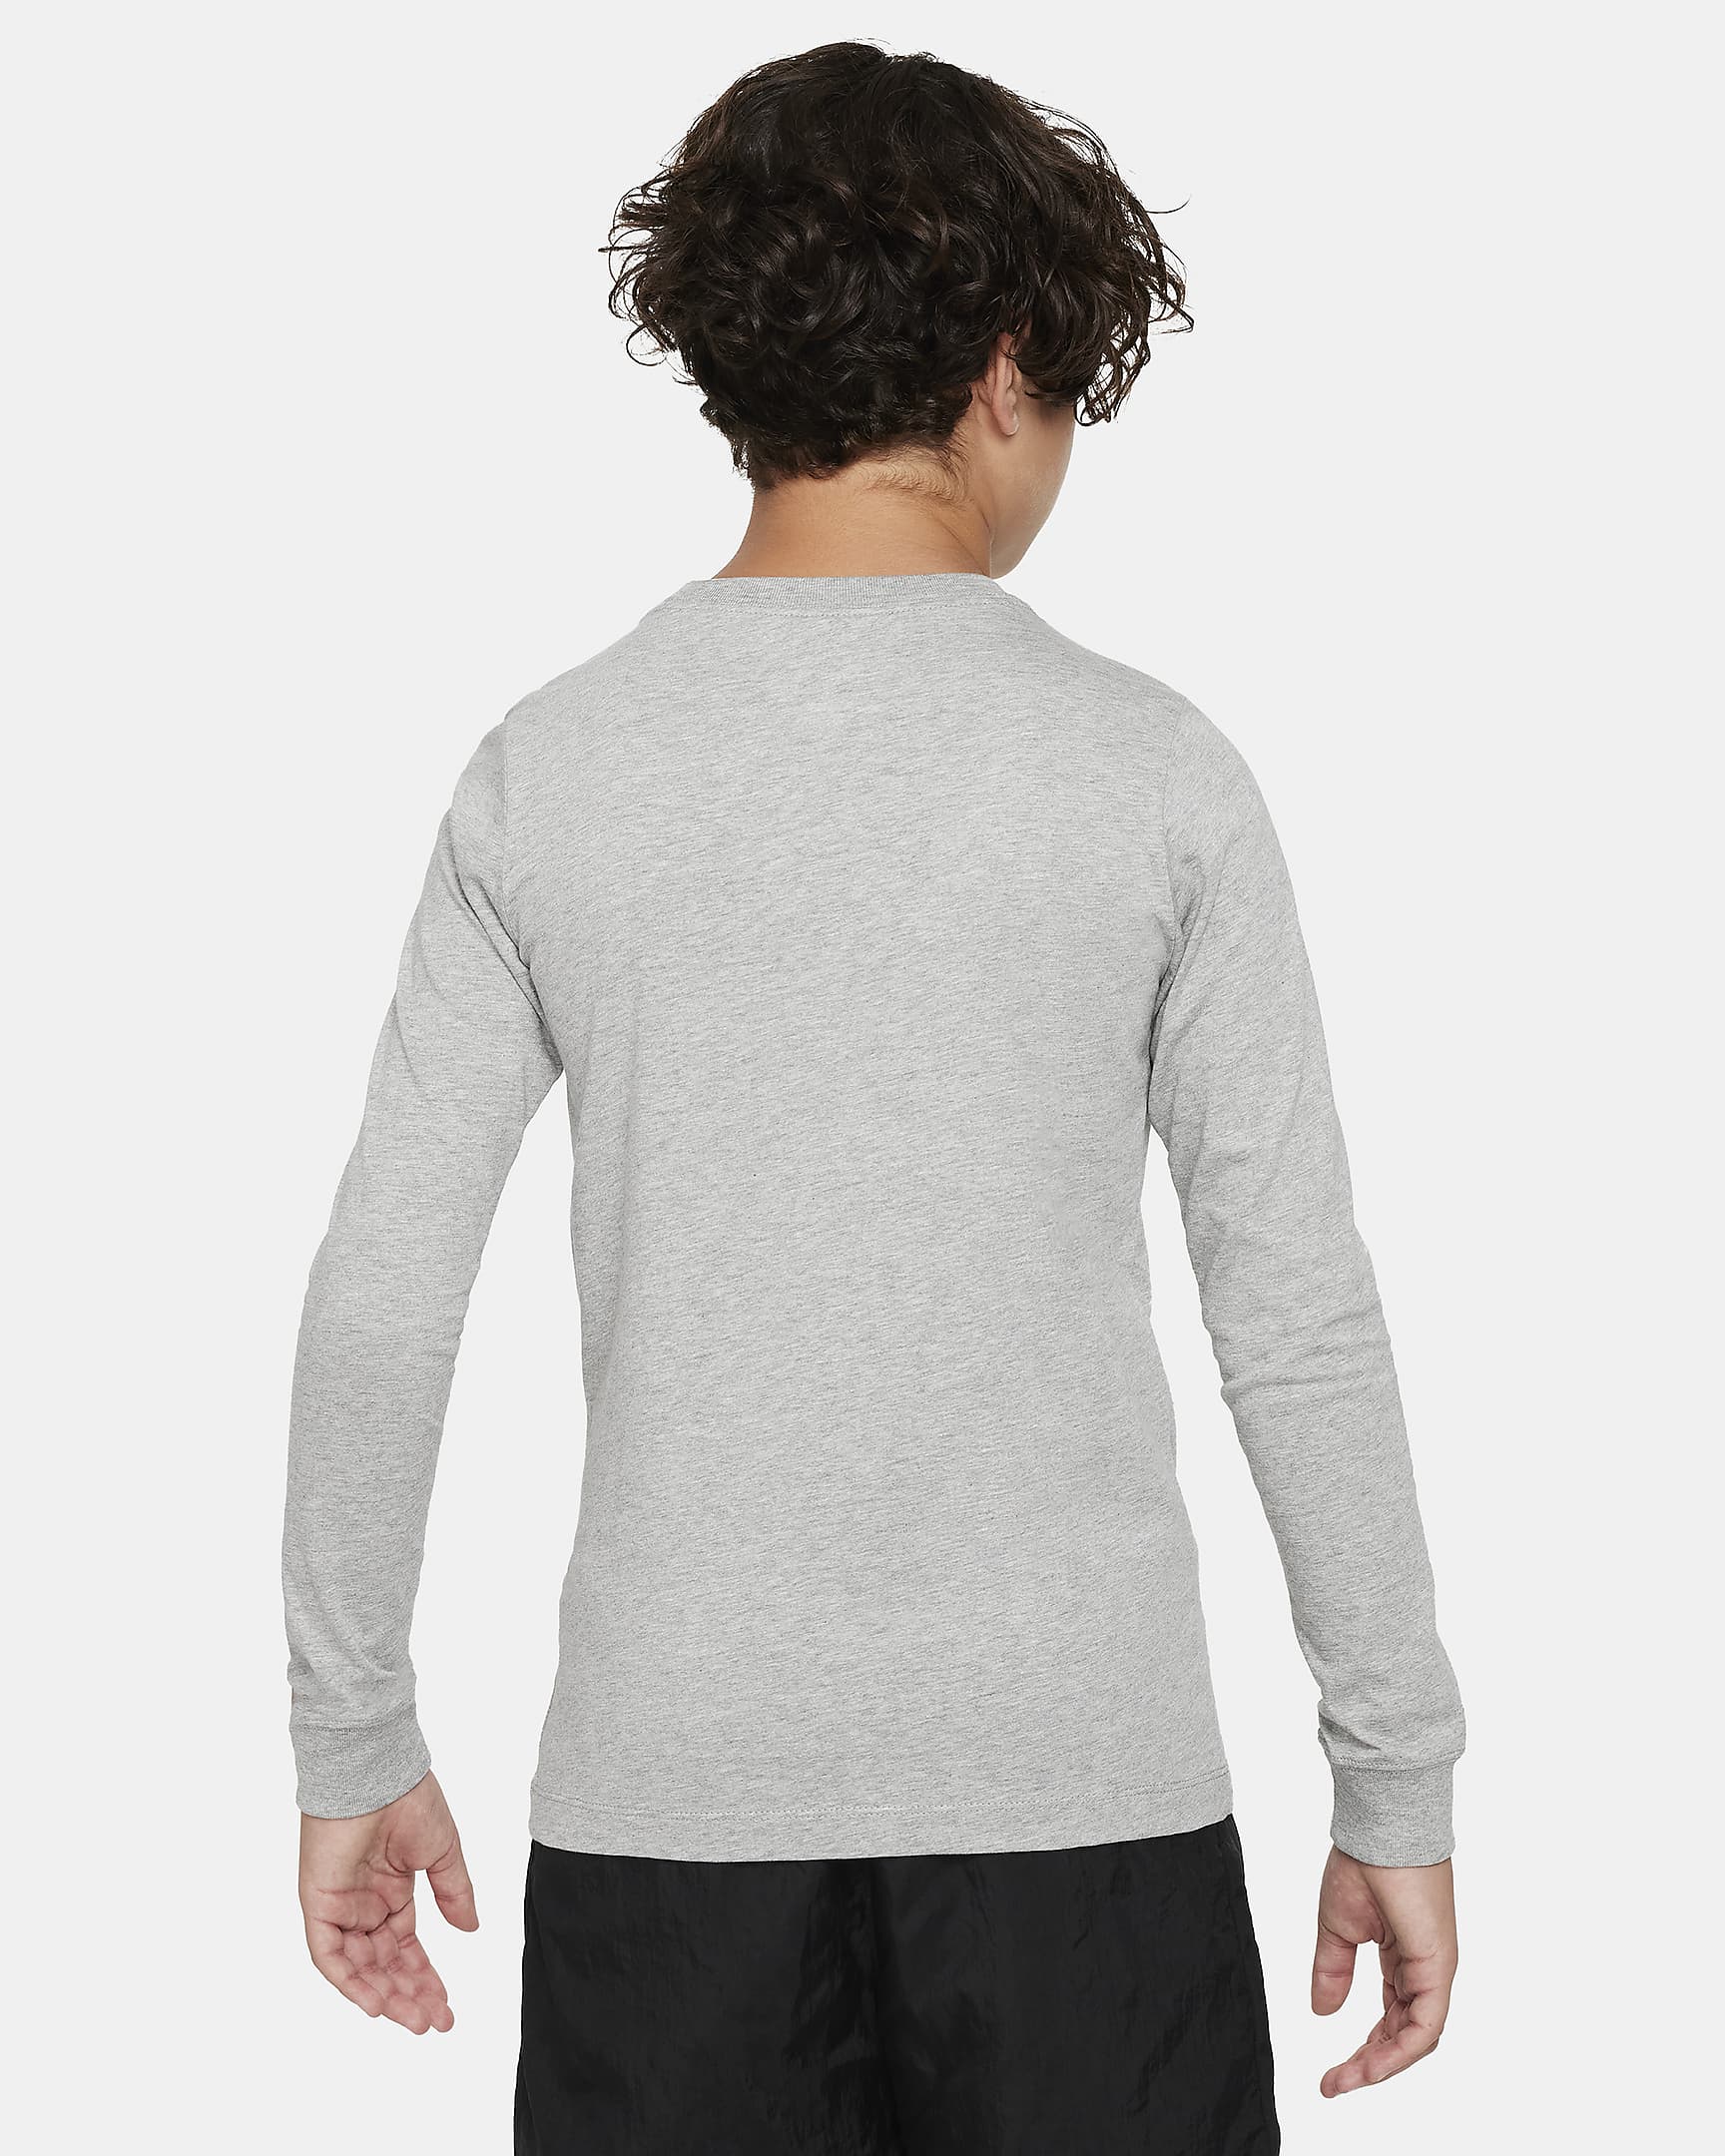 Nike Sportswear Older Kids' Long-Sleeve T-Shirt. Nike PH